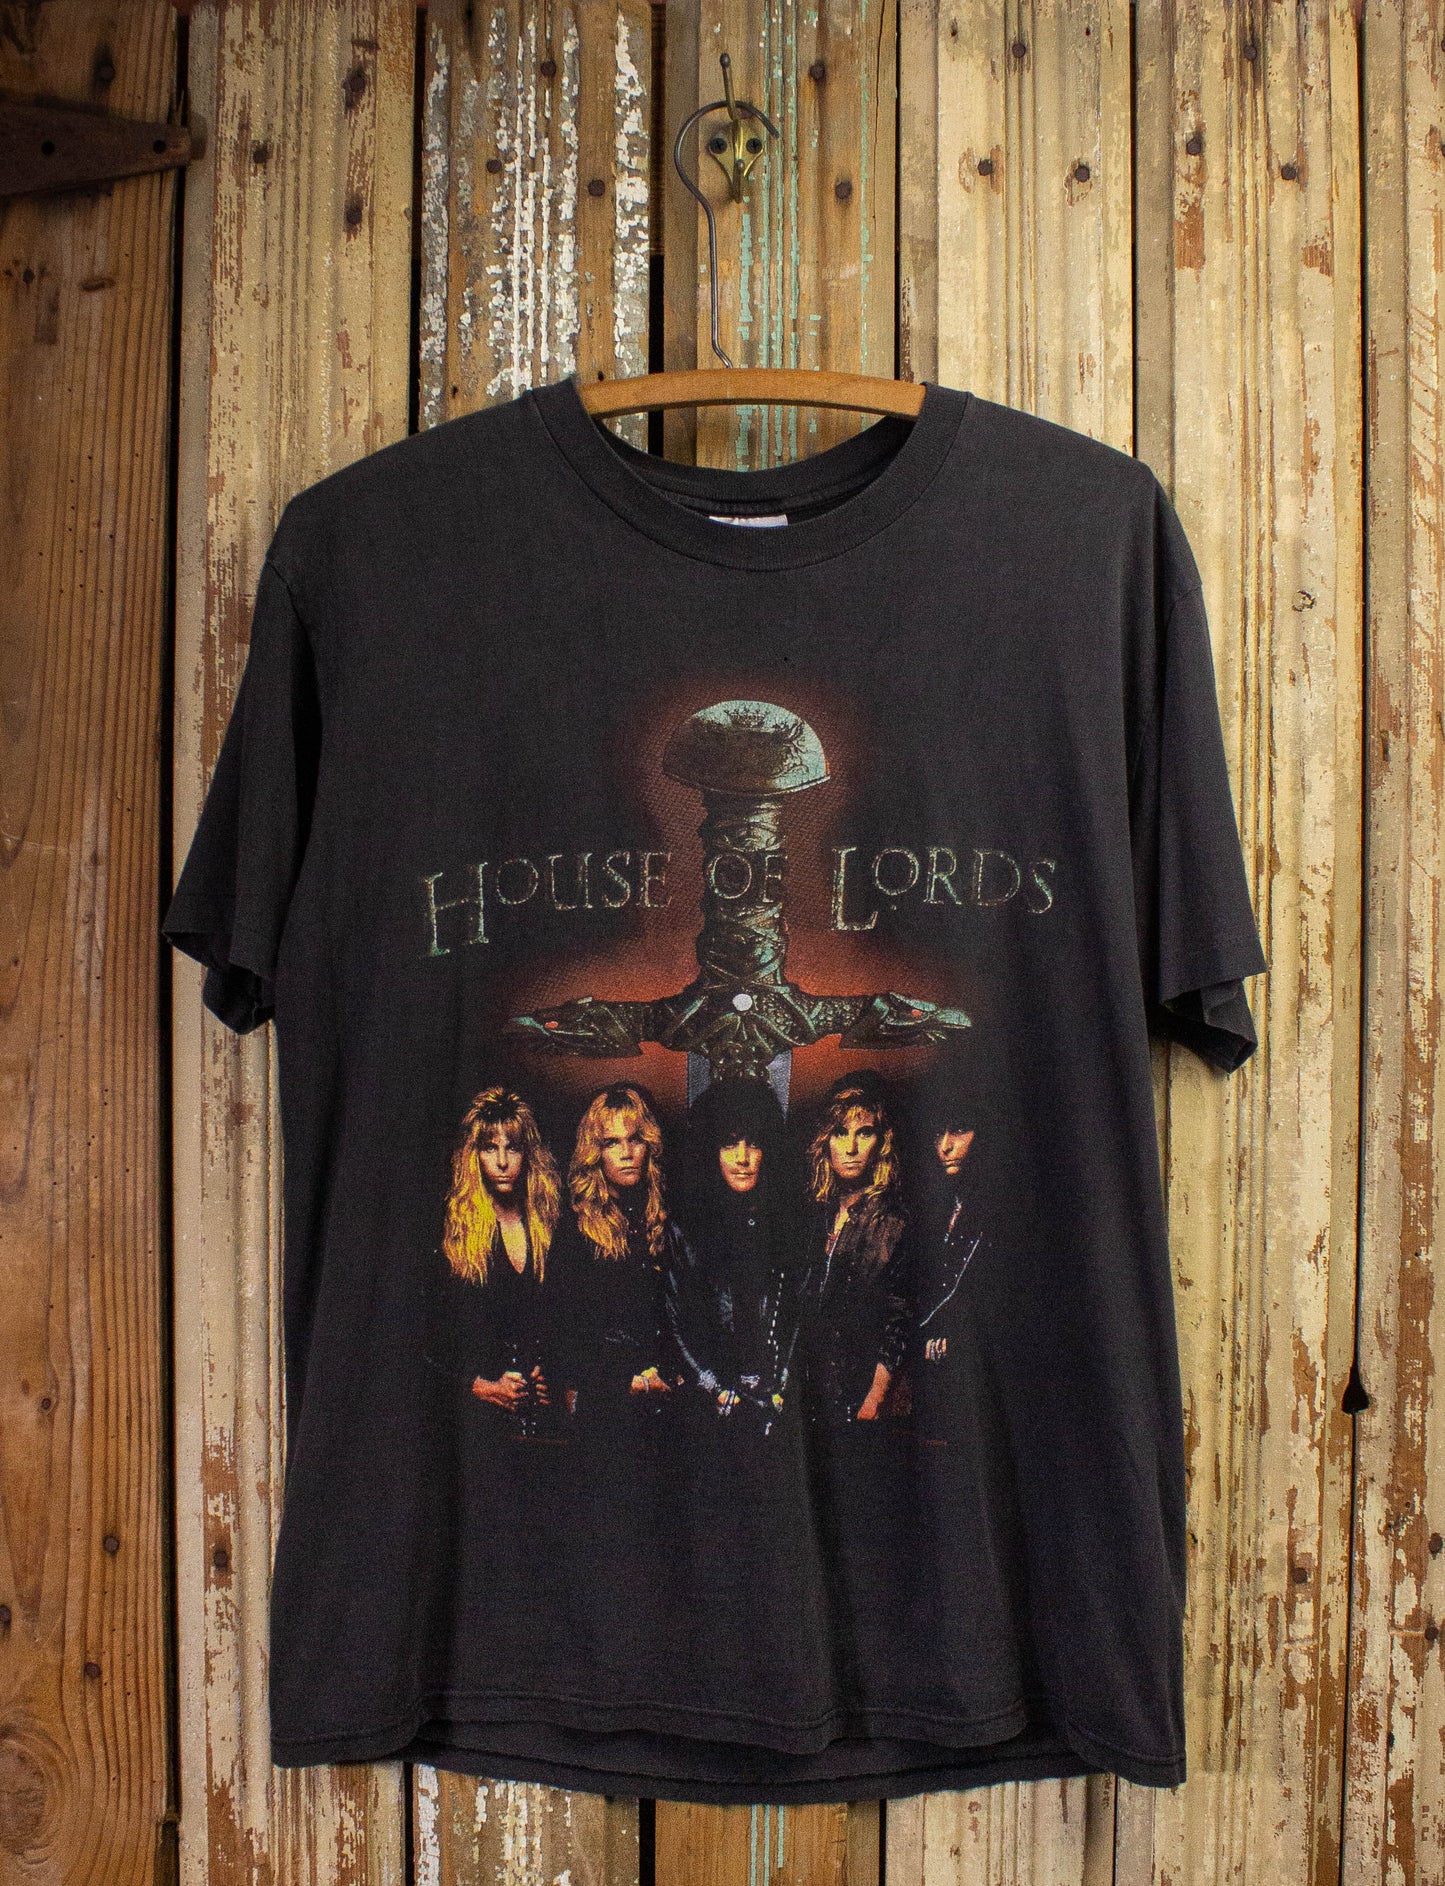 Vintage House of Lords Sahara Tour Concert T Shirt 1990-91 Black Medium